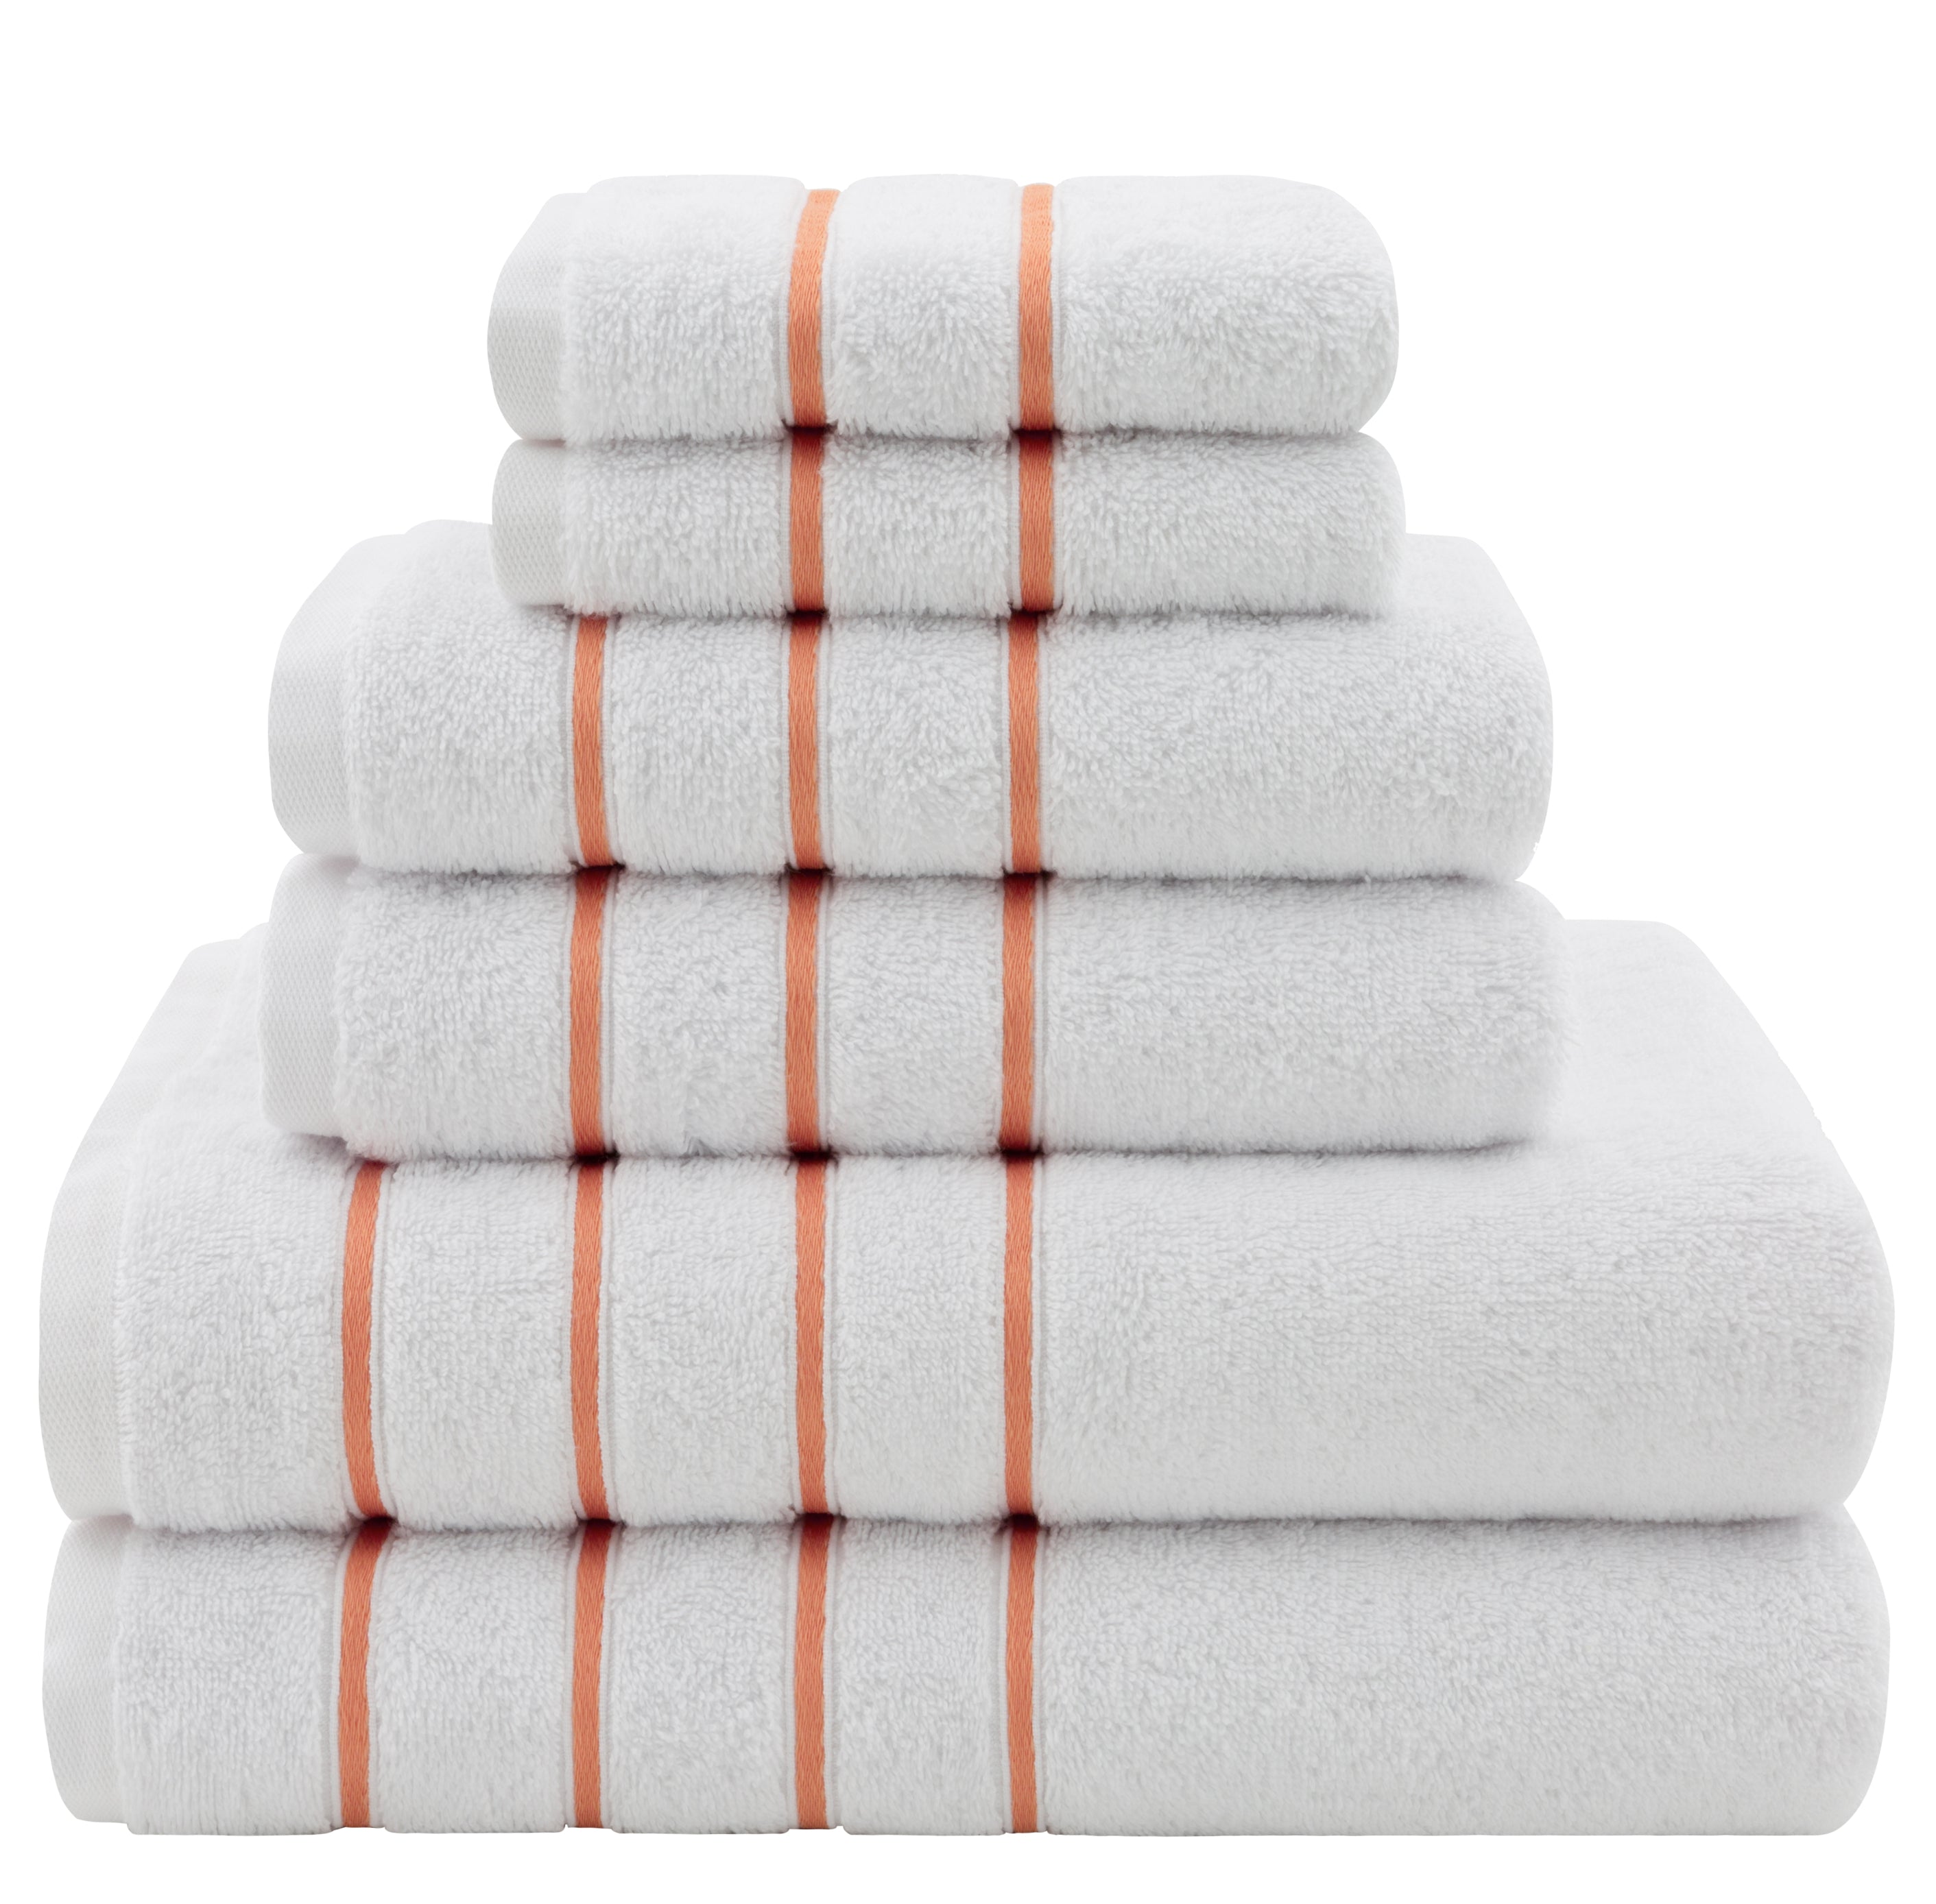 American Soft Linen - Salem 6 Piece Turkish Cotton Luxury Towel Set - Malibu-Peach - 1